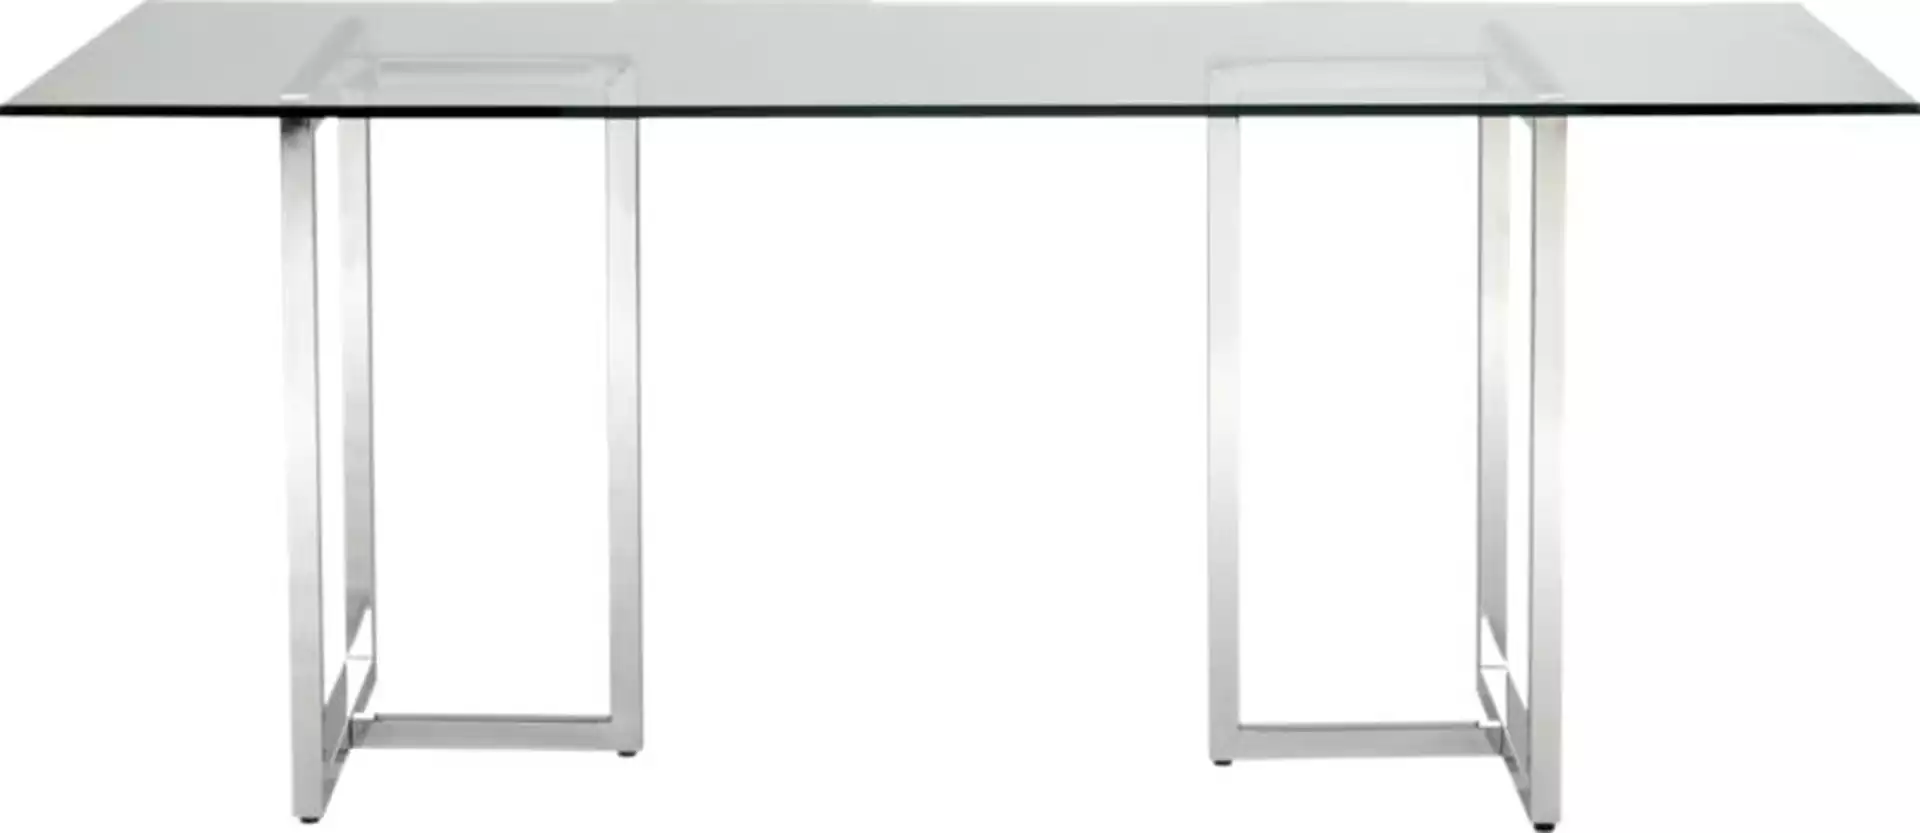 "silverado chrome 72"" rectangular dining table"